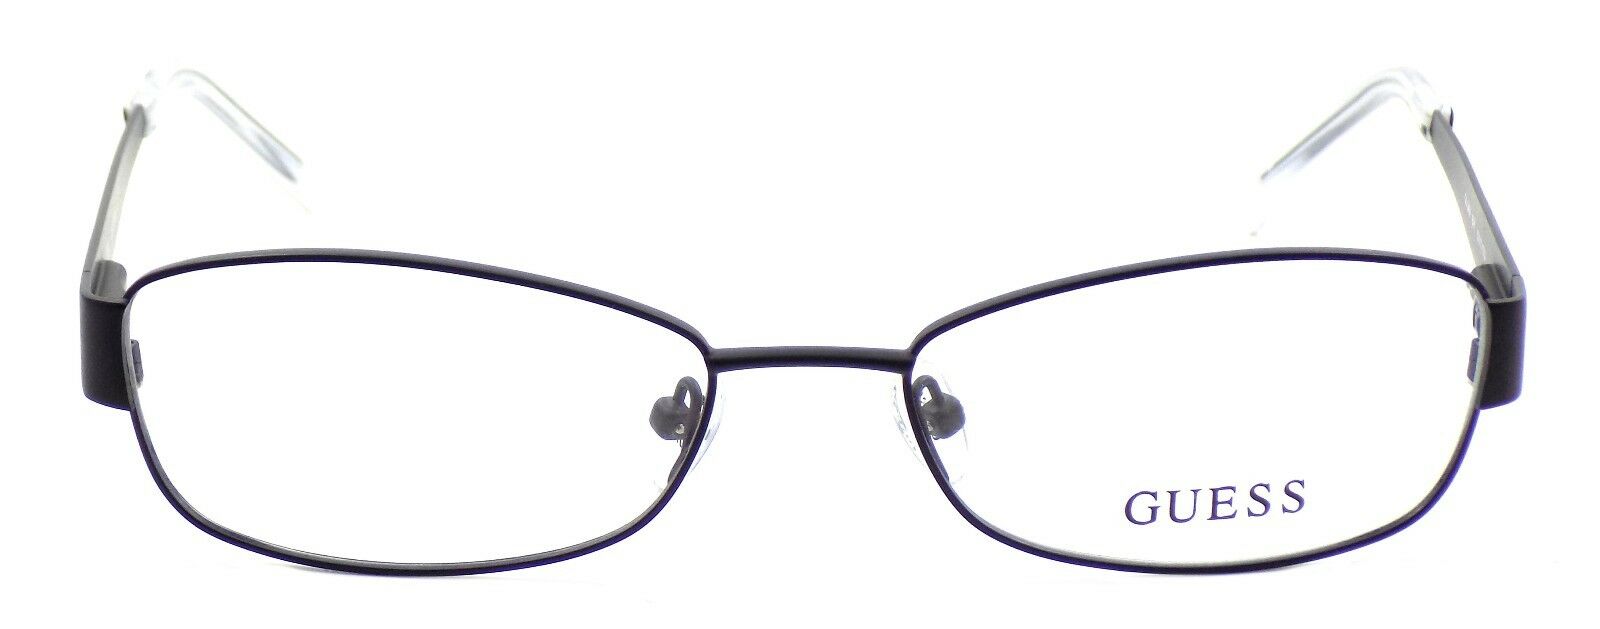 2-GUESS GU2404 BLK Women's Eyeglasses Frames 53-17-135 Black + CASE-715583959576-IKSpecs